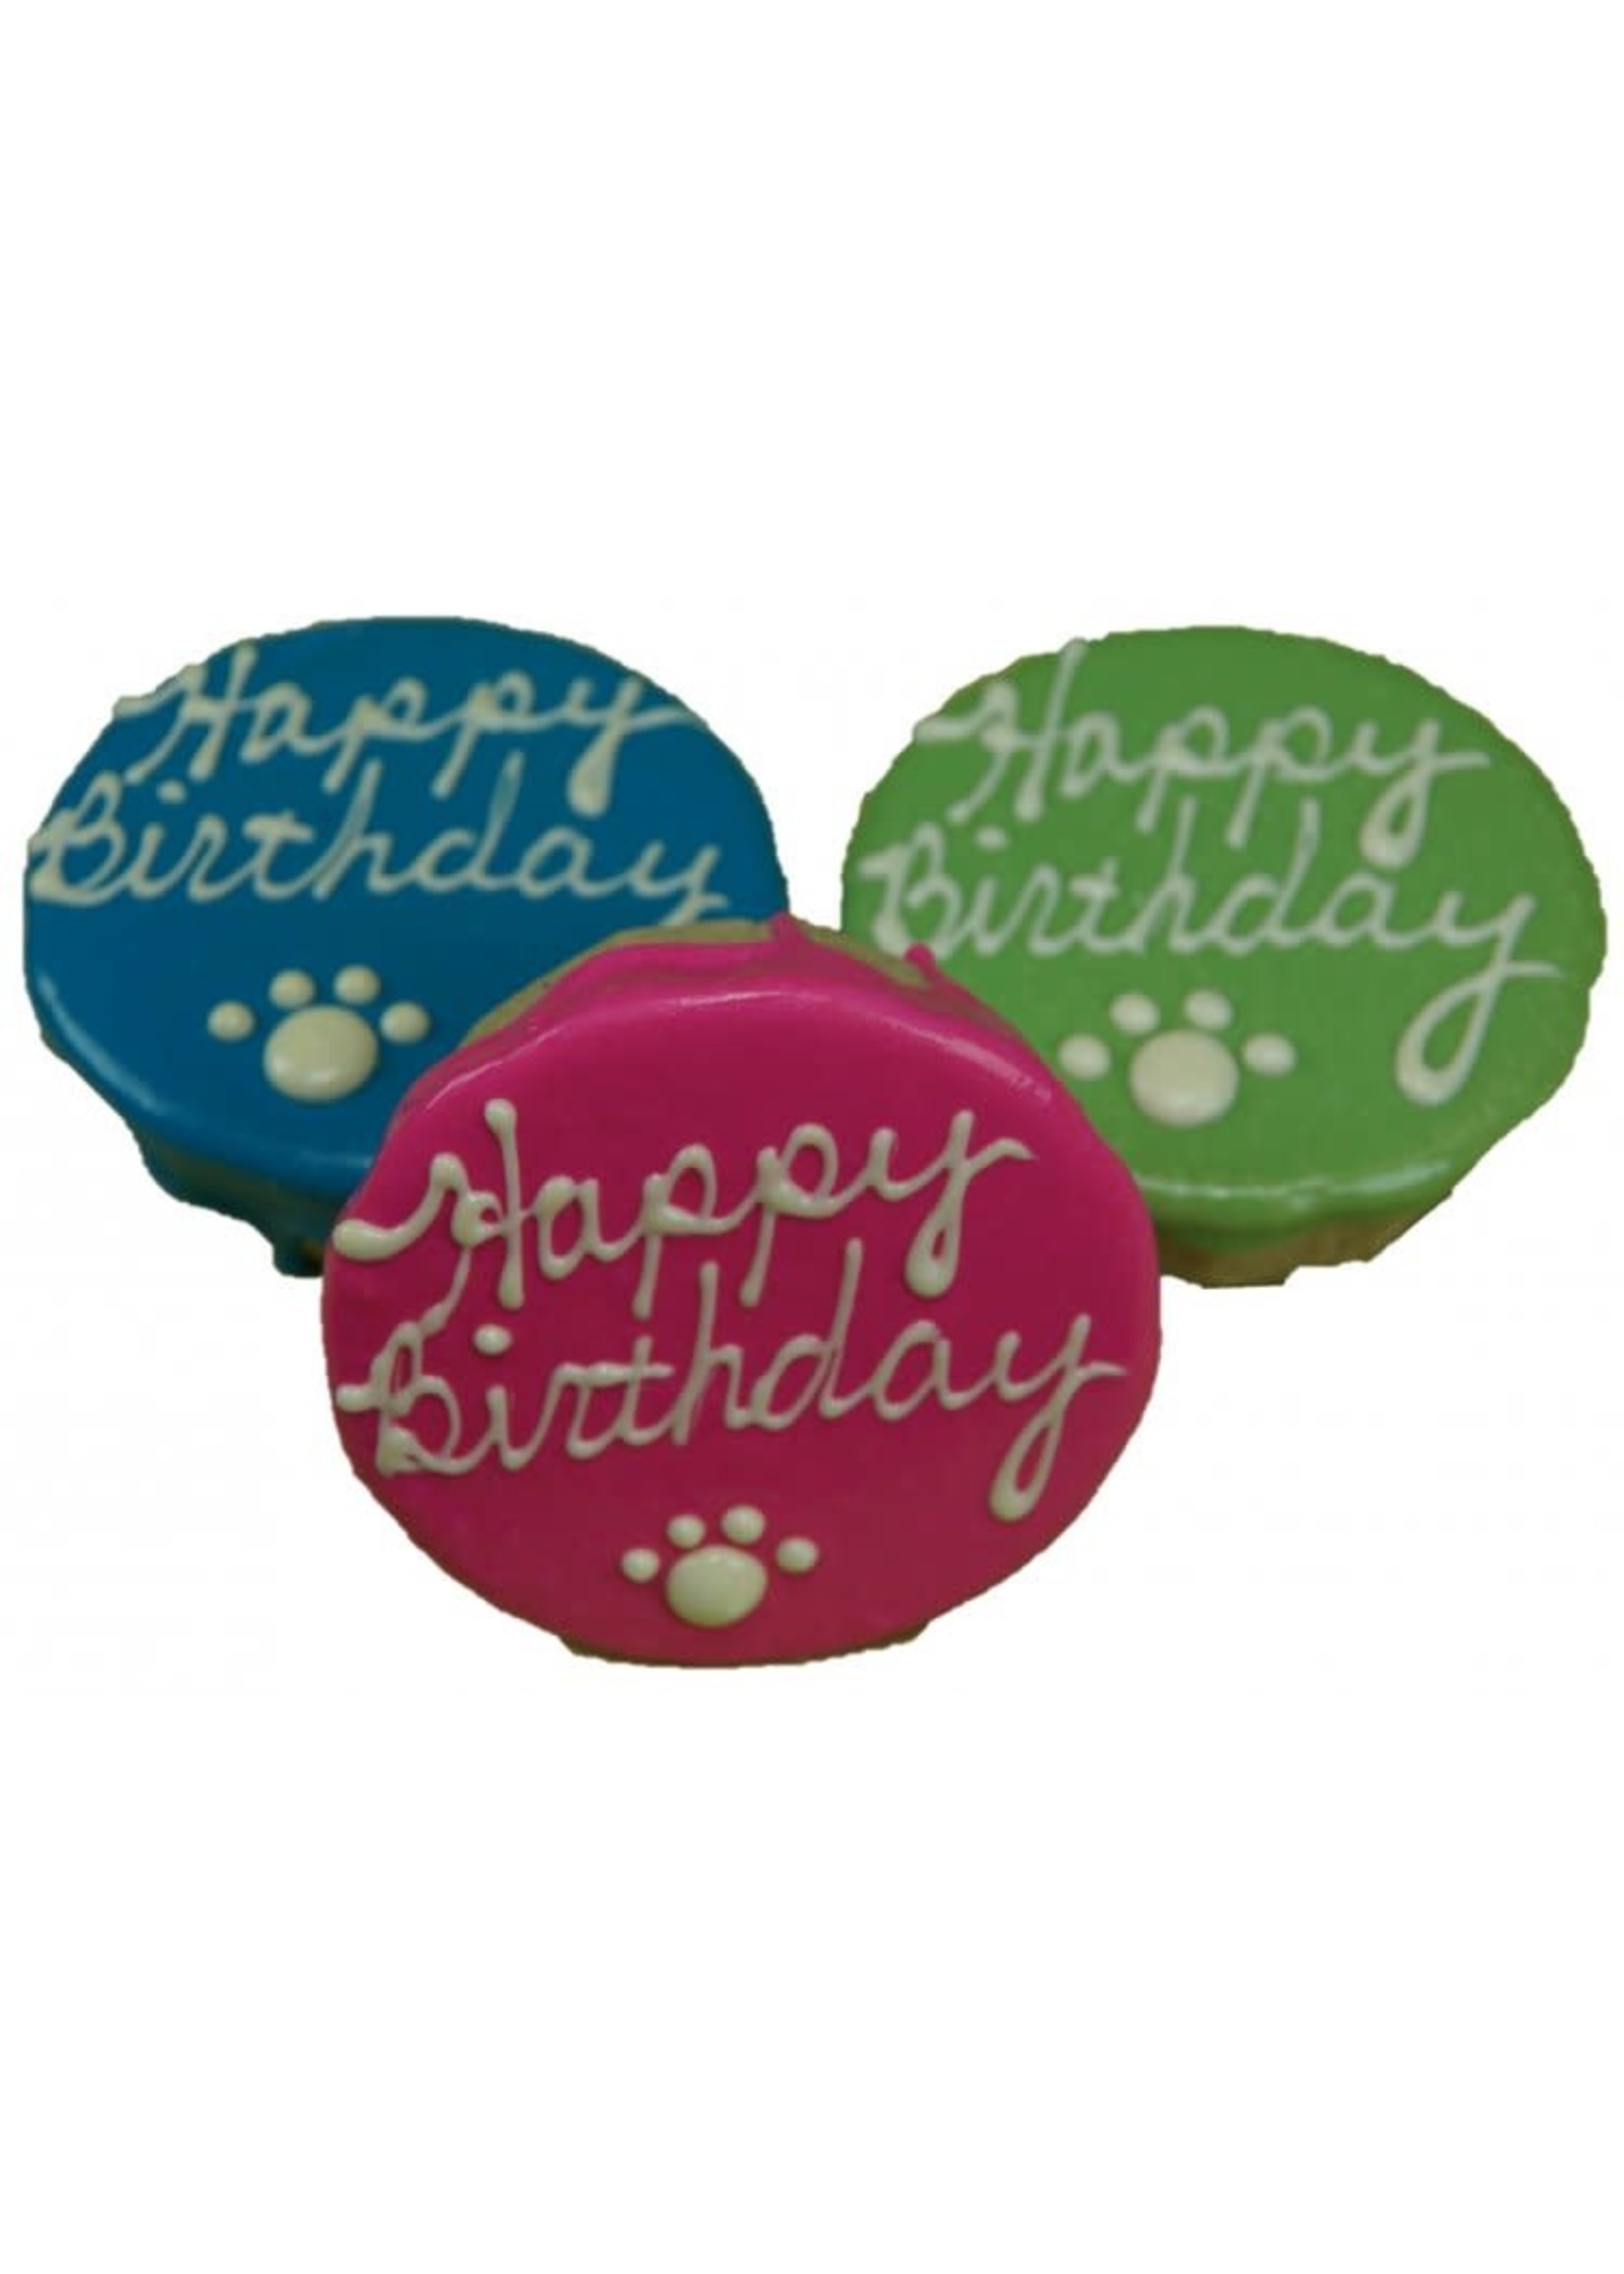 Preppy Puppy Mini Birthday Cakes 4 inch